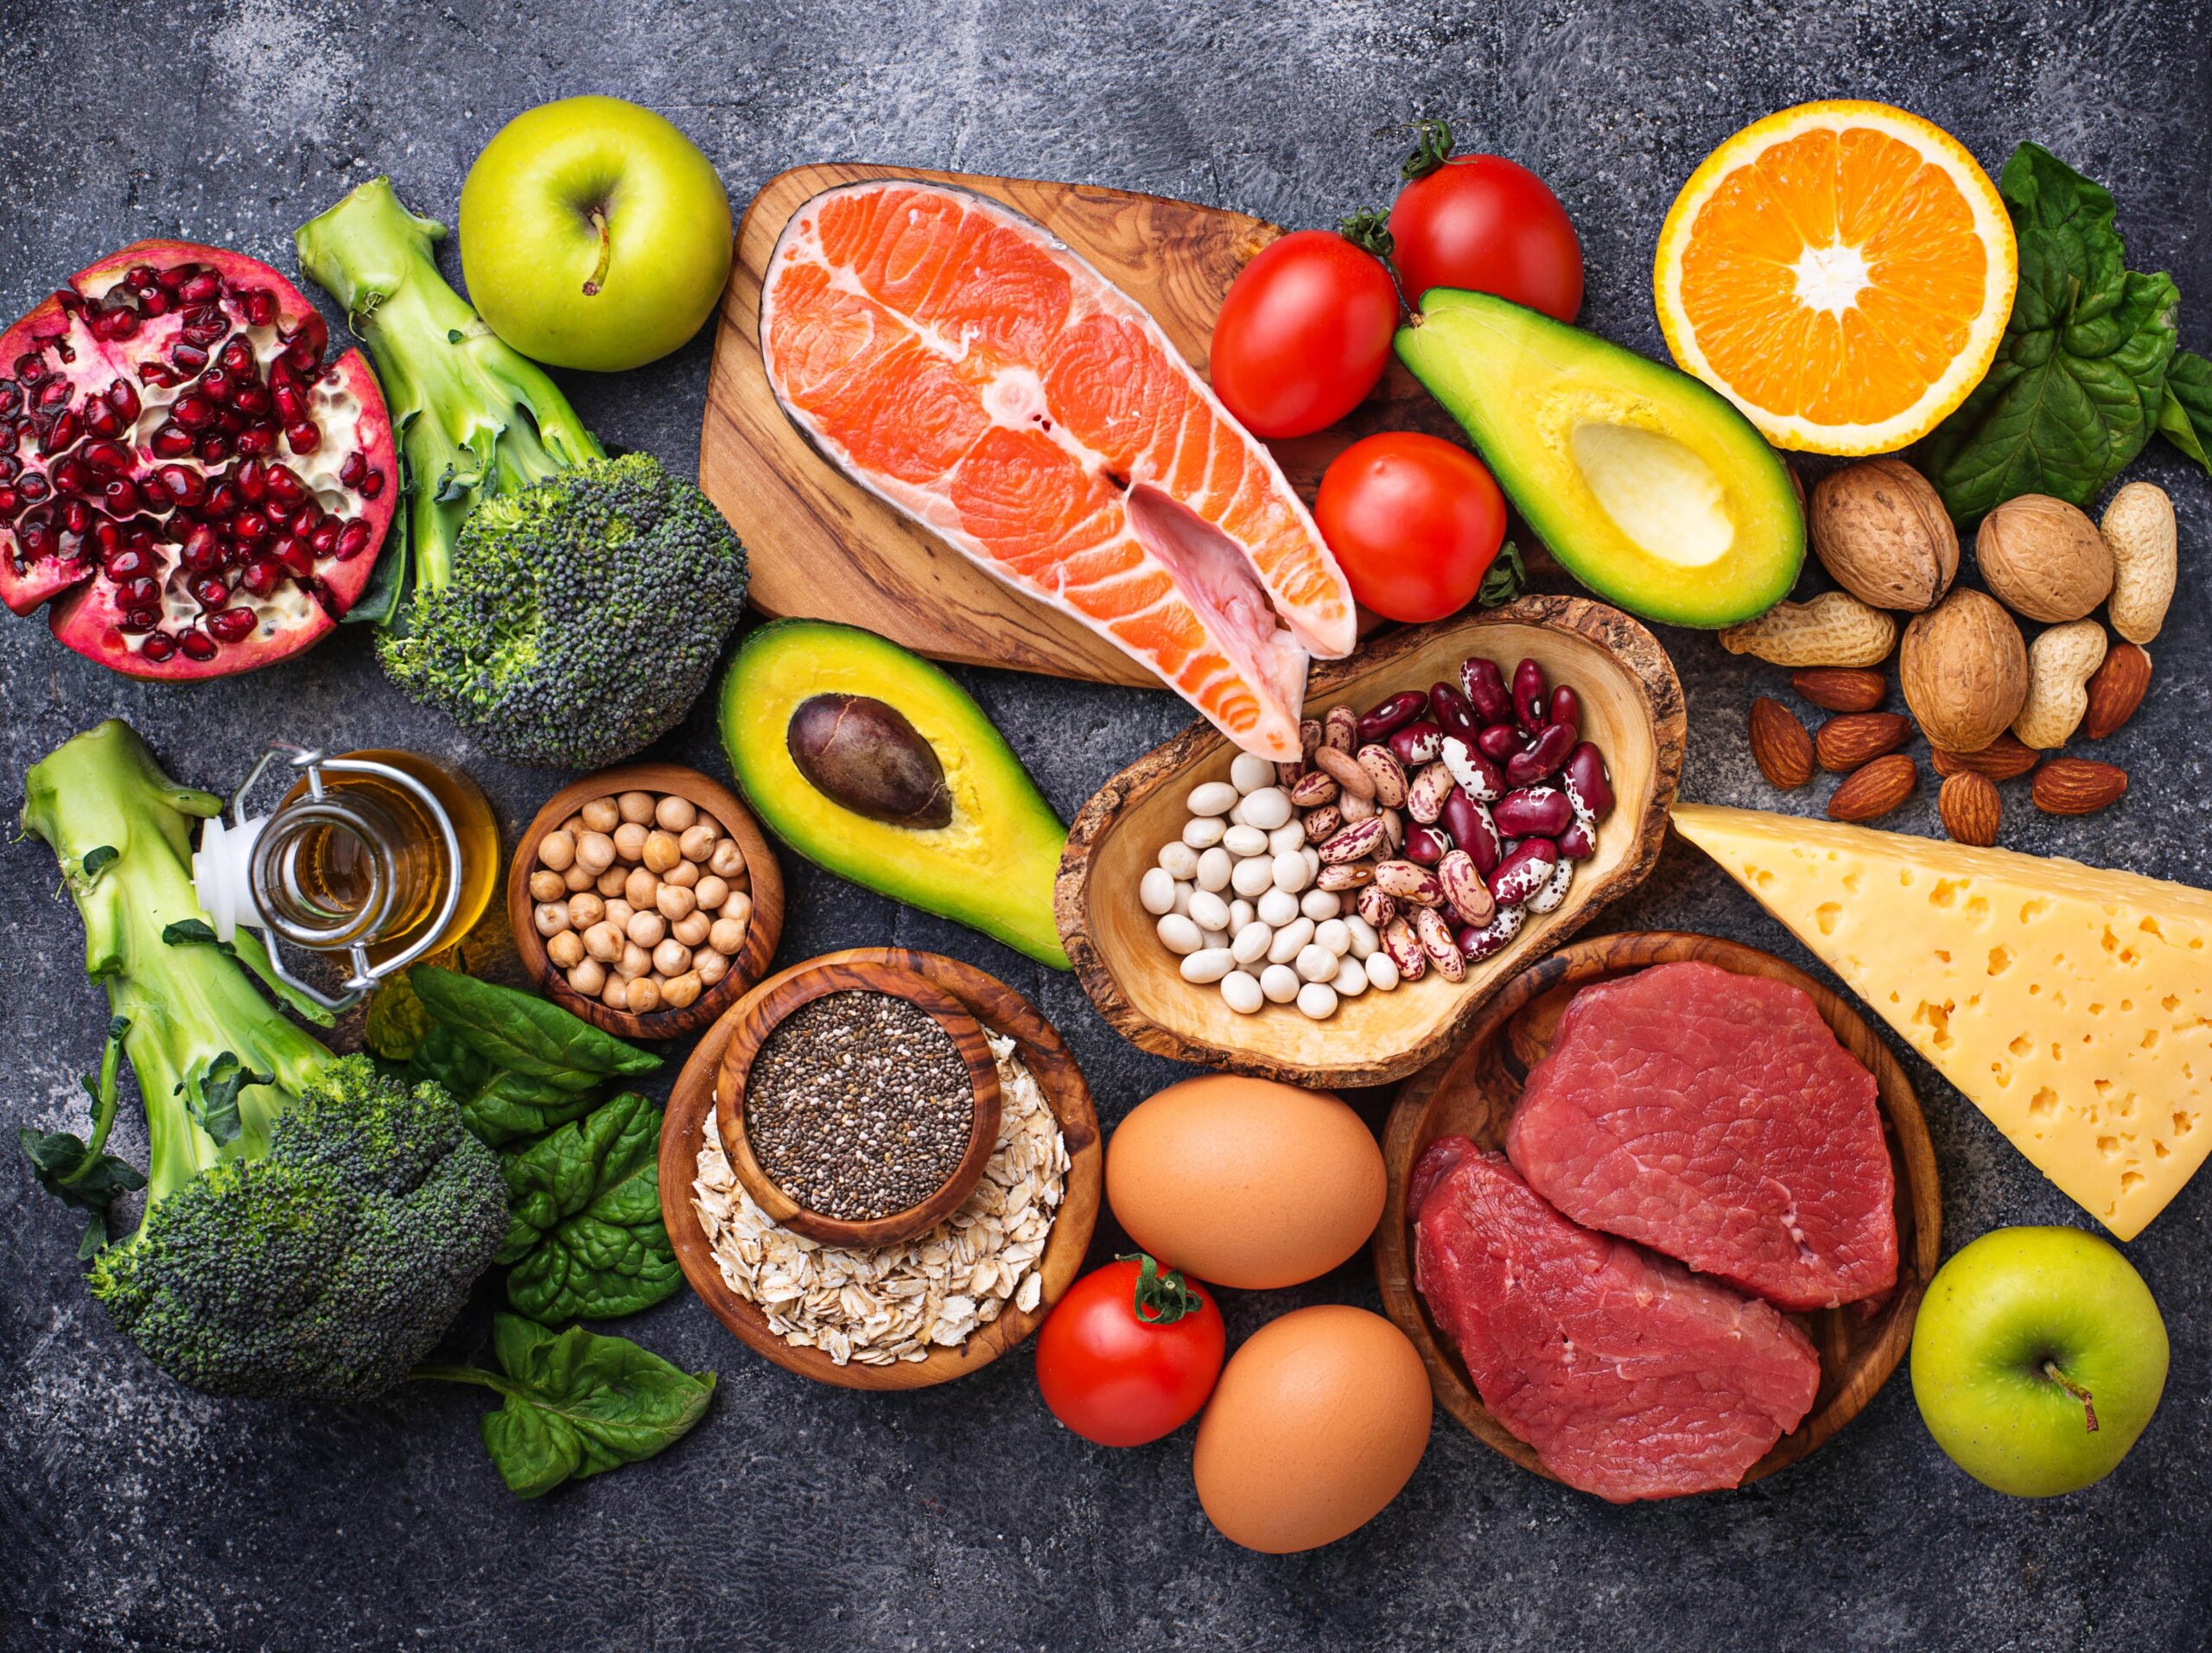 Take Food's Health Benefits Into Account Before Taking Vitamins